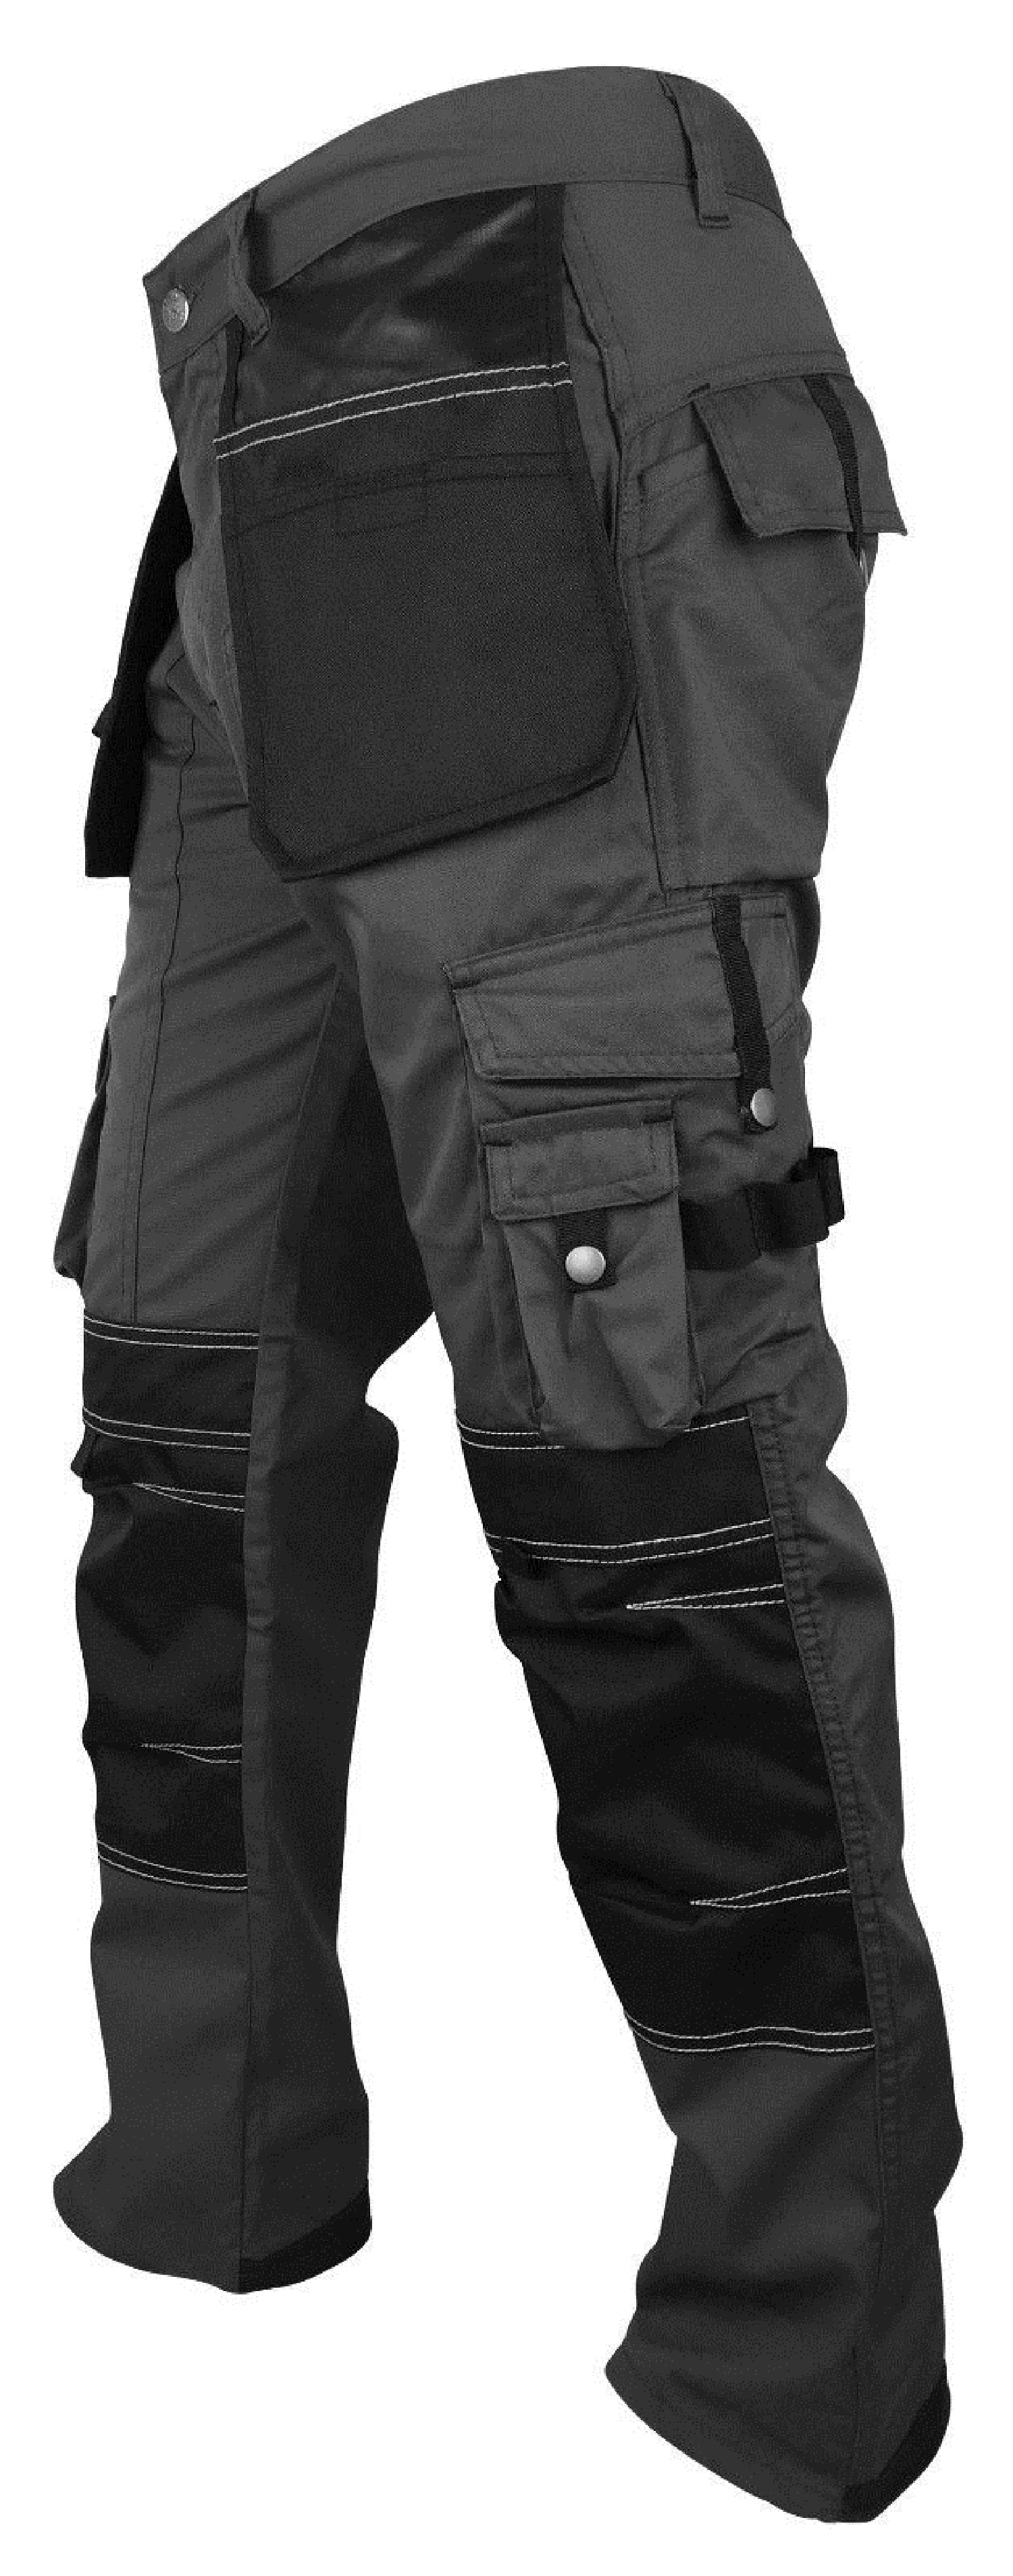  Tradies Grey Work Pants 34W x 31L with Knee Pad